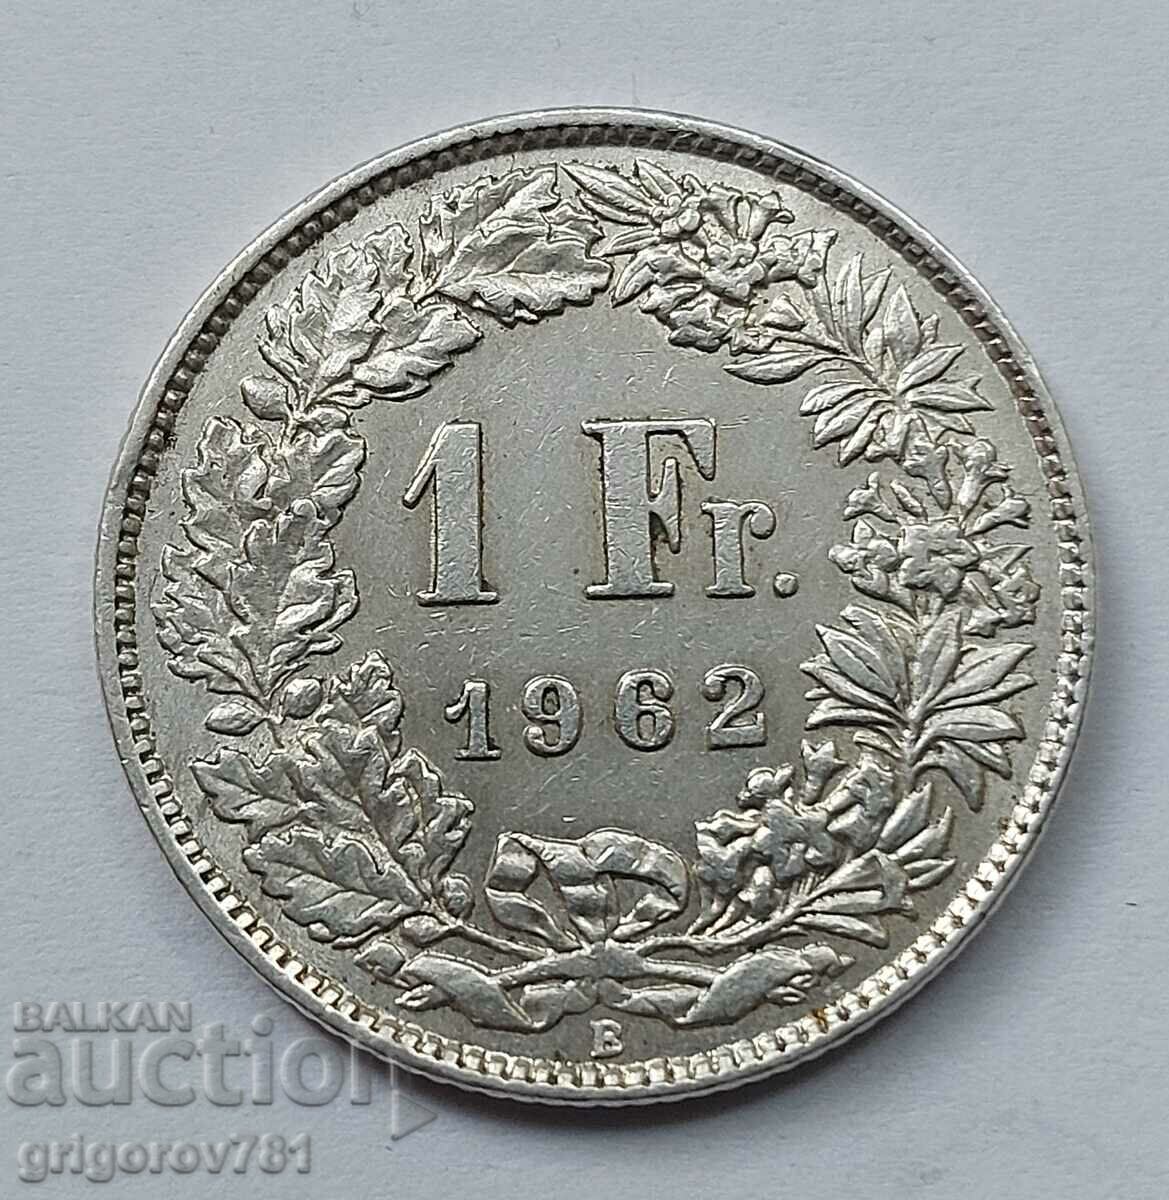 1 Franc Silver Switzerland 1962 B - Silver Coin #16